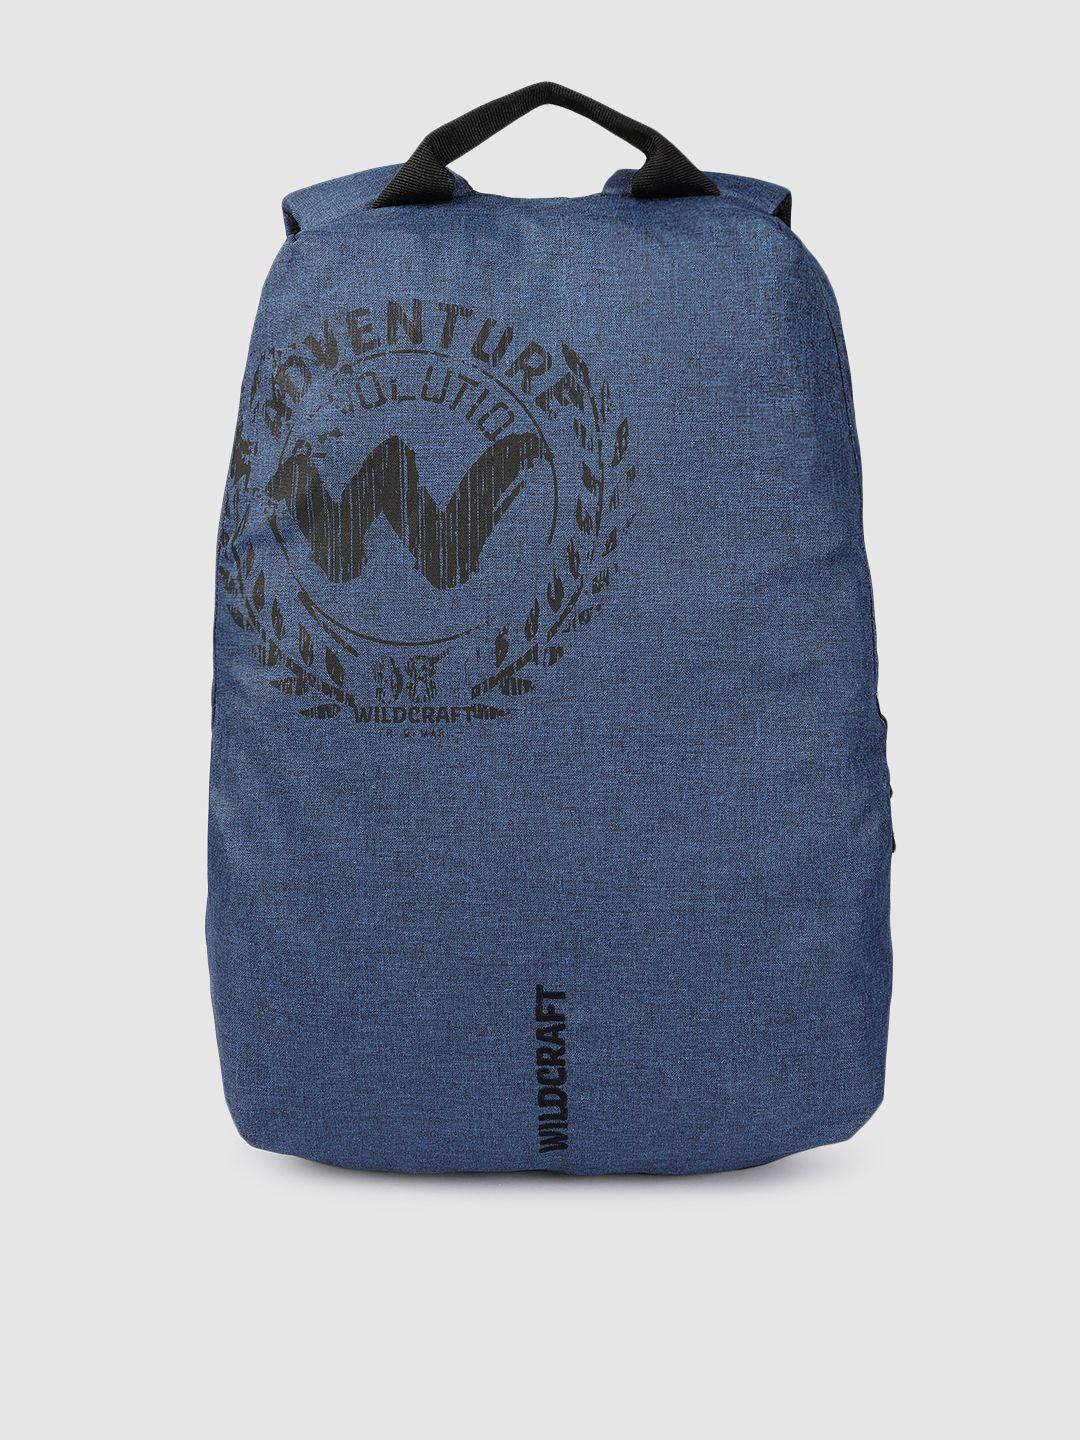 wildcraft-unisex-blue-knight_mel-brand-logo-backpack